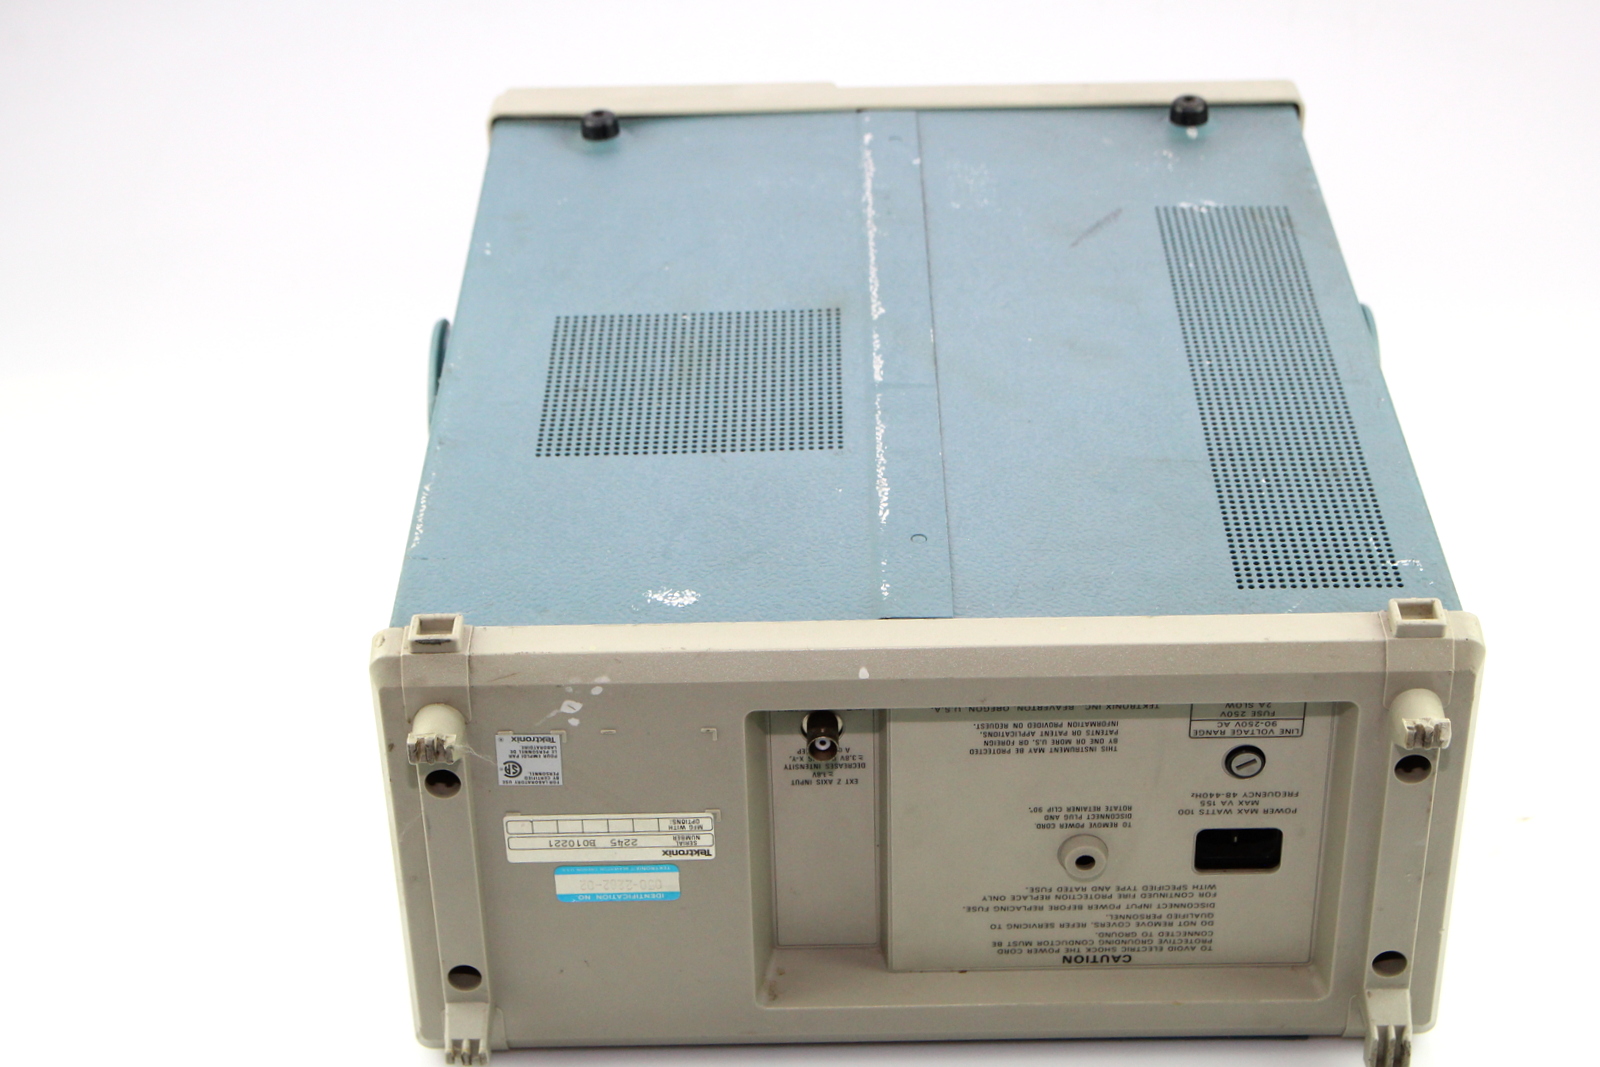 Tektronix 2245A 100MHz 4 channel oscilloscope | eBay